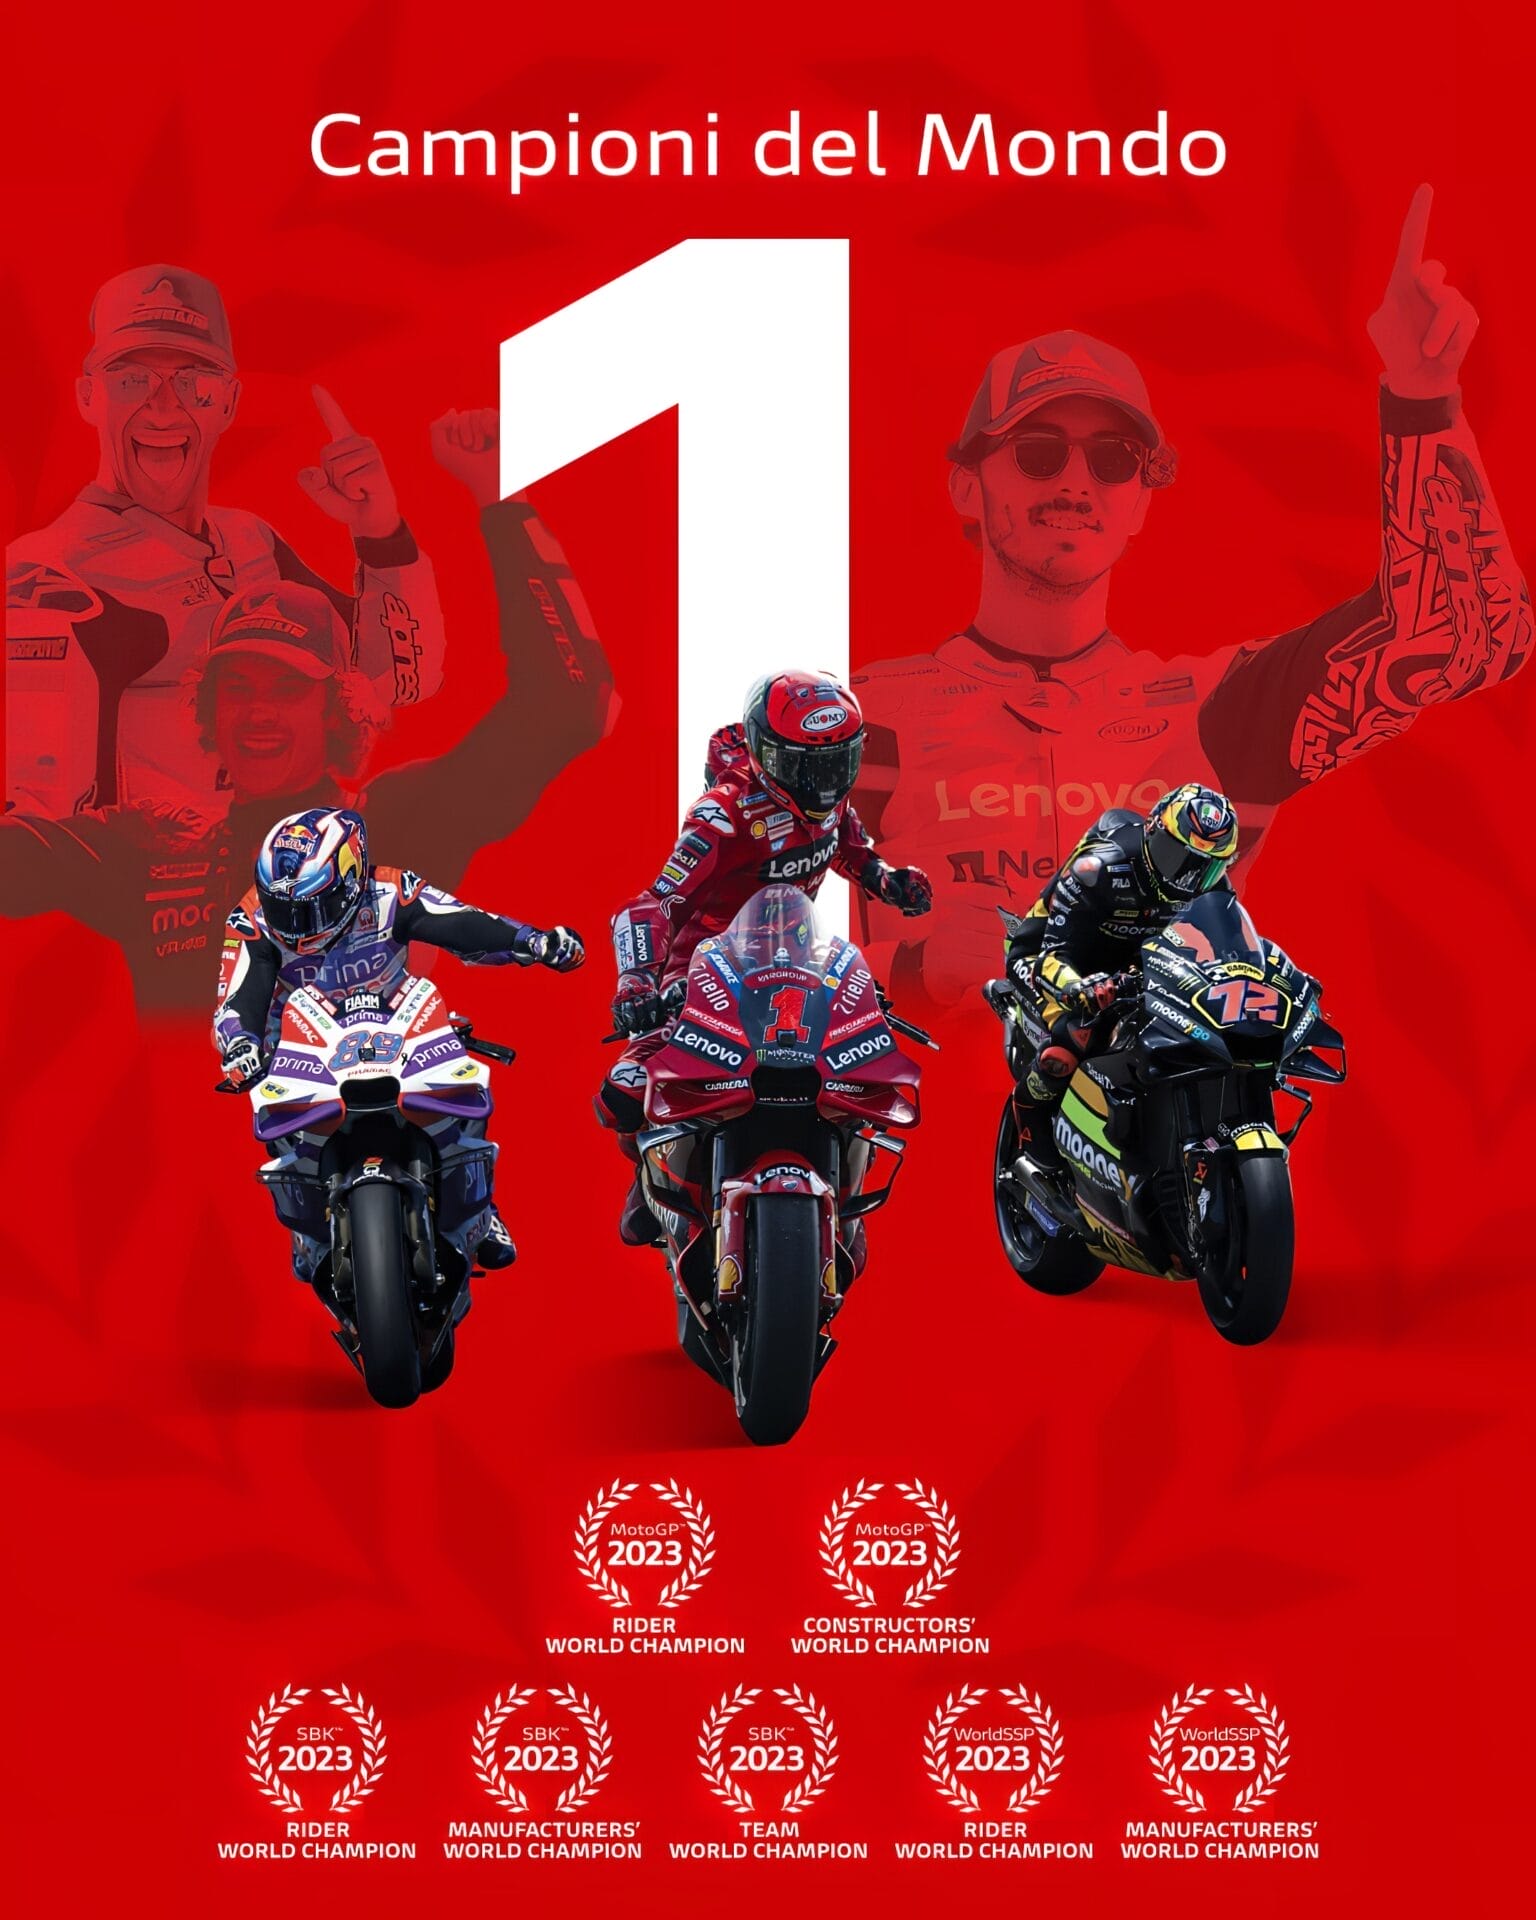 Ducati’s triumph in the racing world: double MotoGP World Championship title and record-breaking season